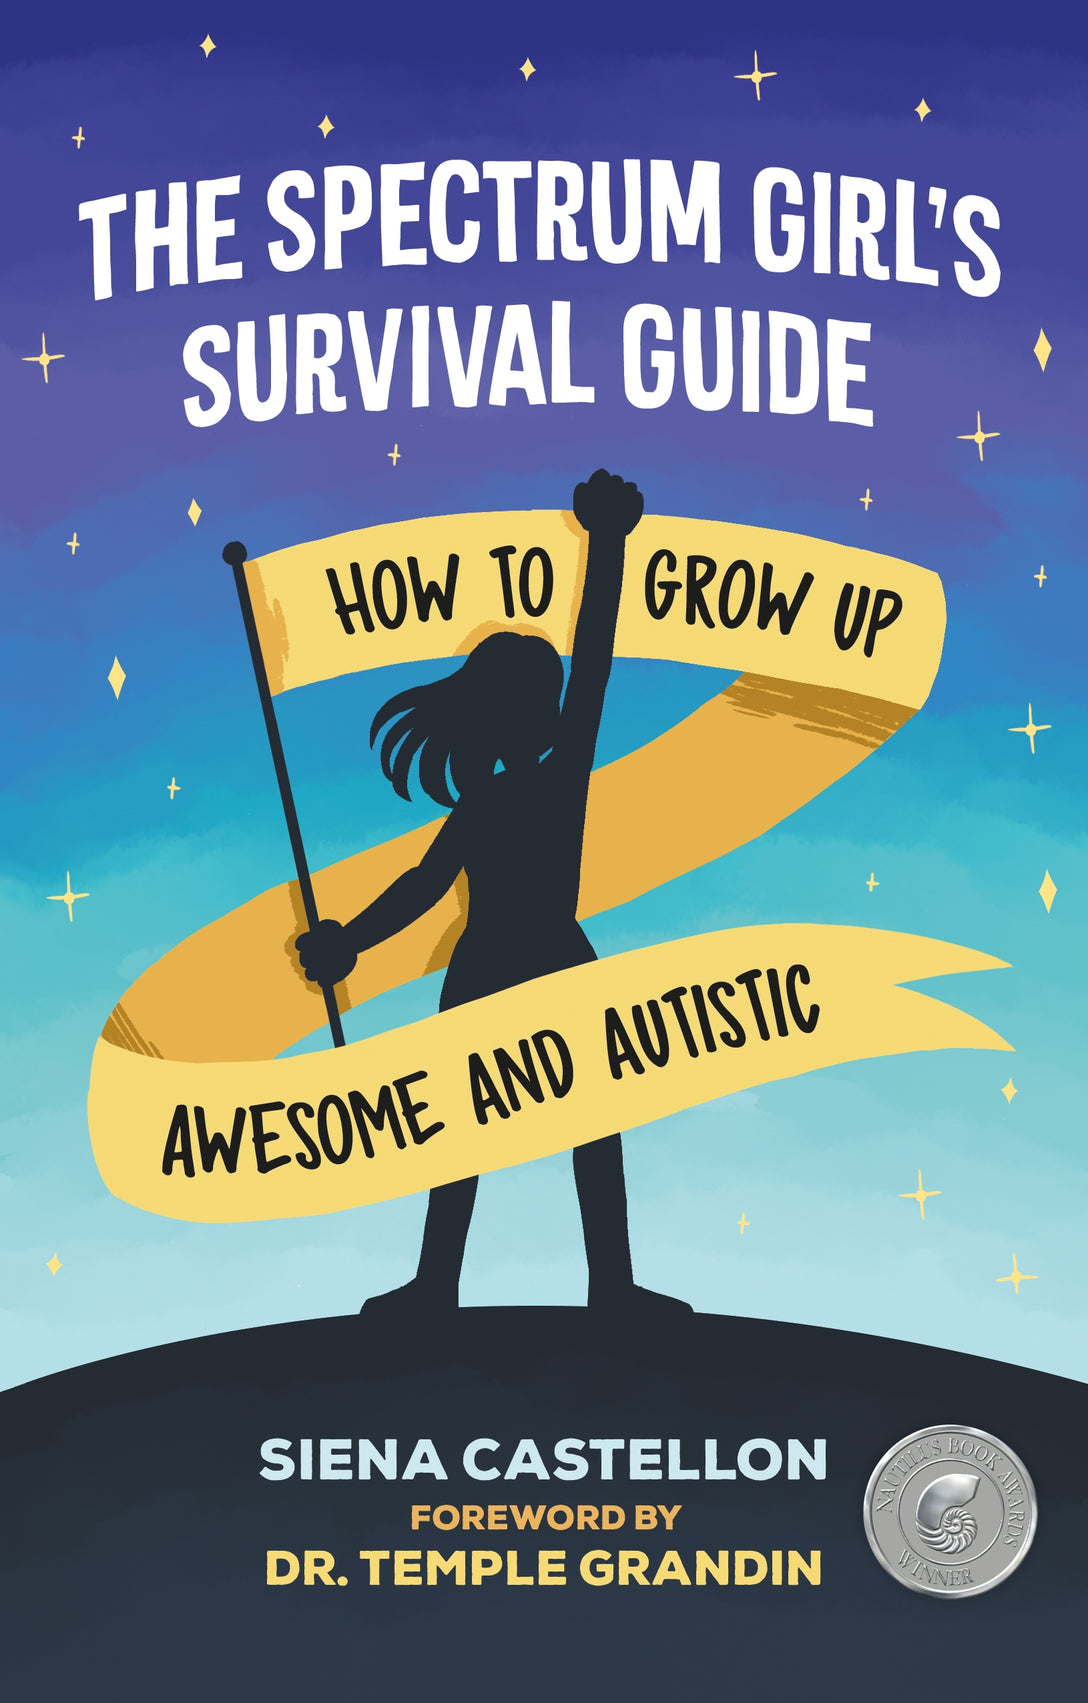 The Spectrum Girl's Survival Guide by Siena Castellon